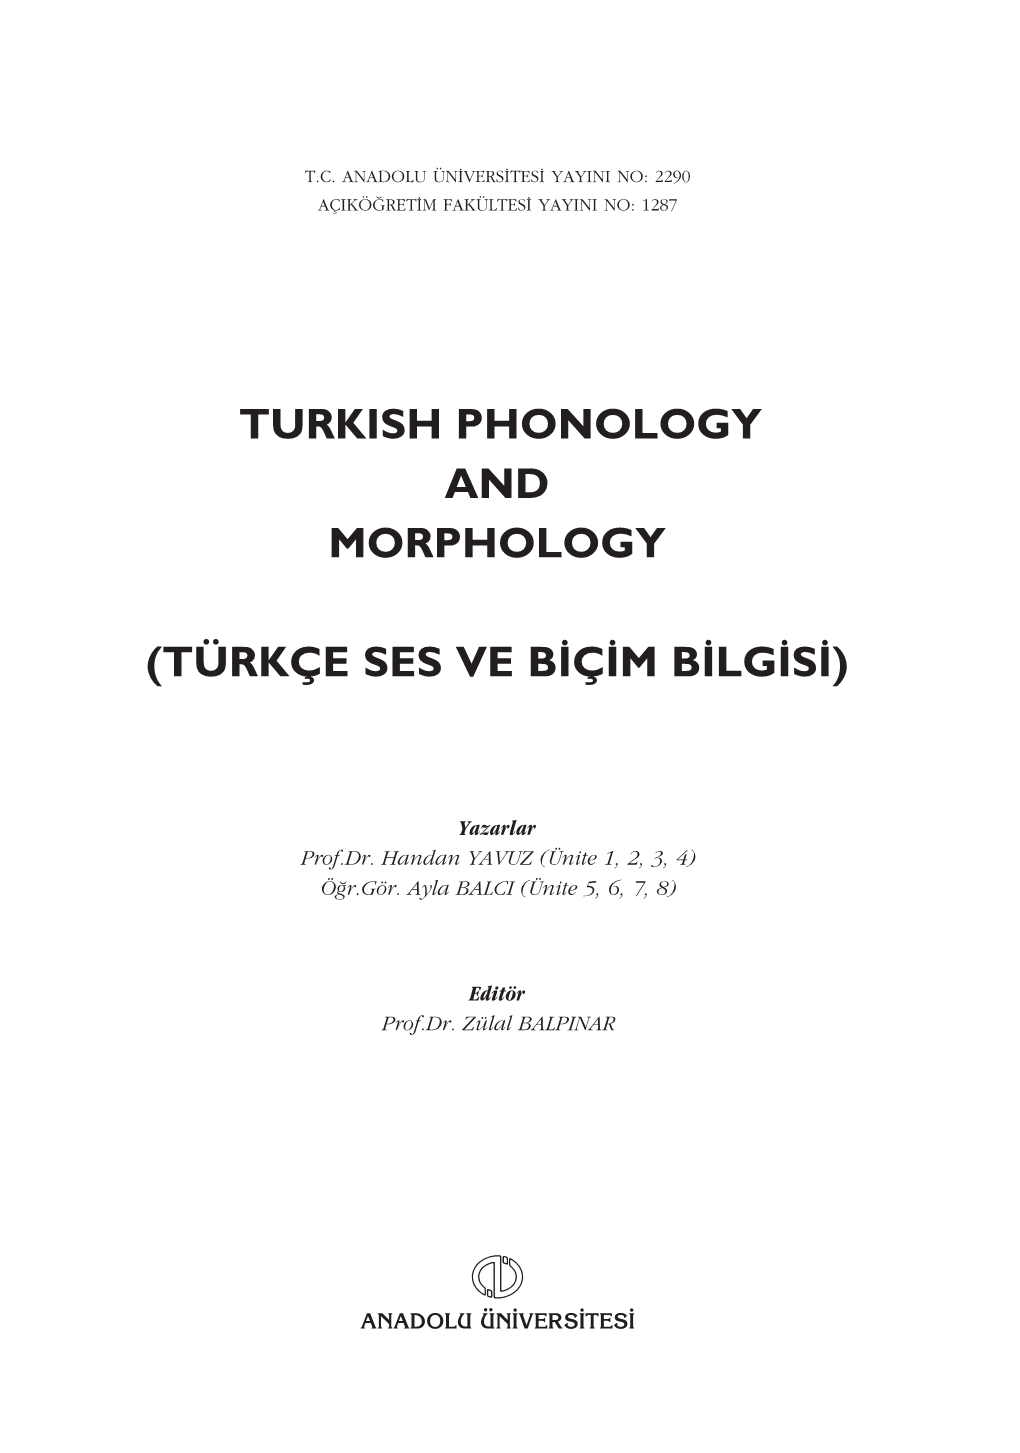 Turkish Phonology and Morphology